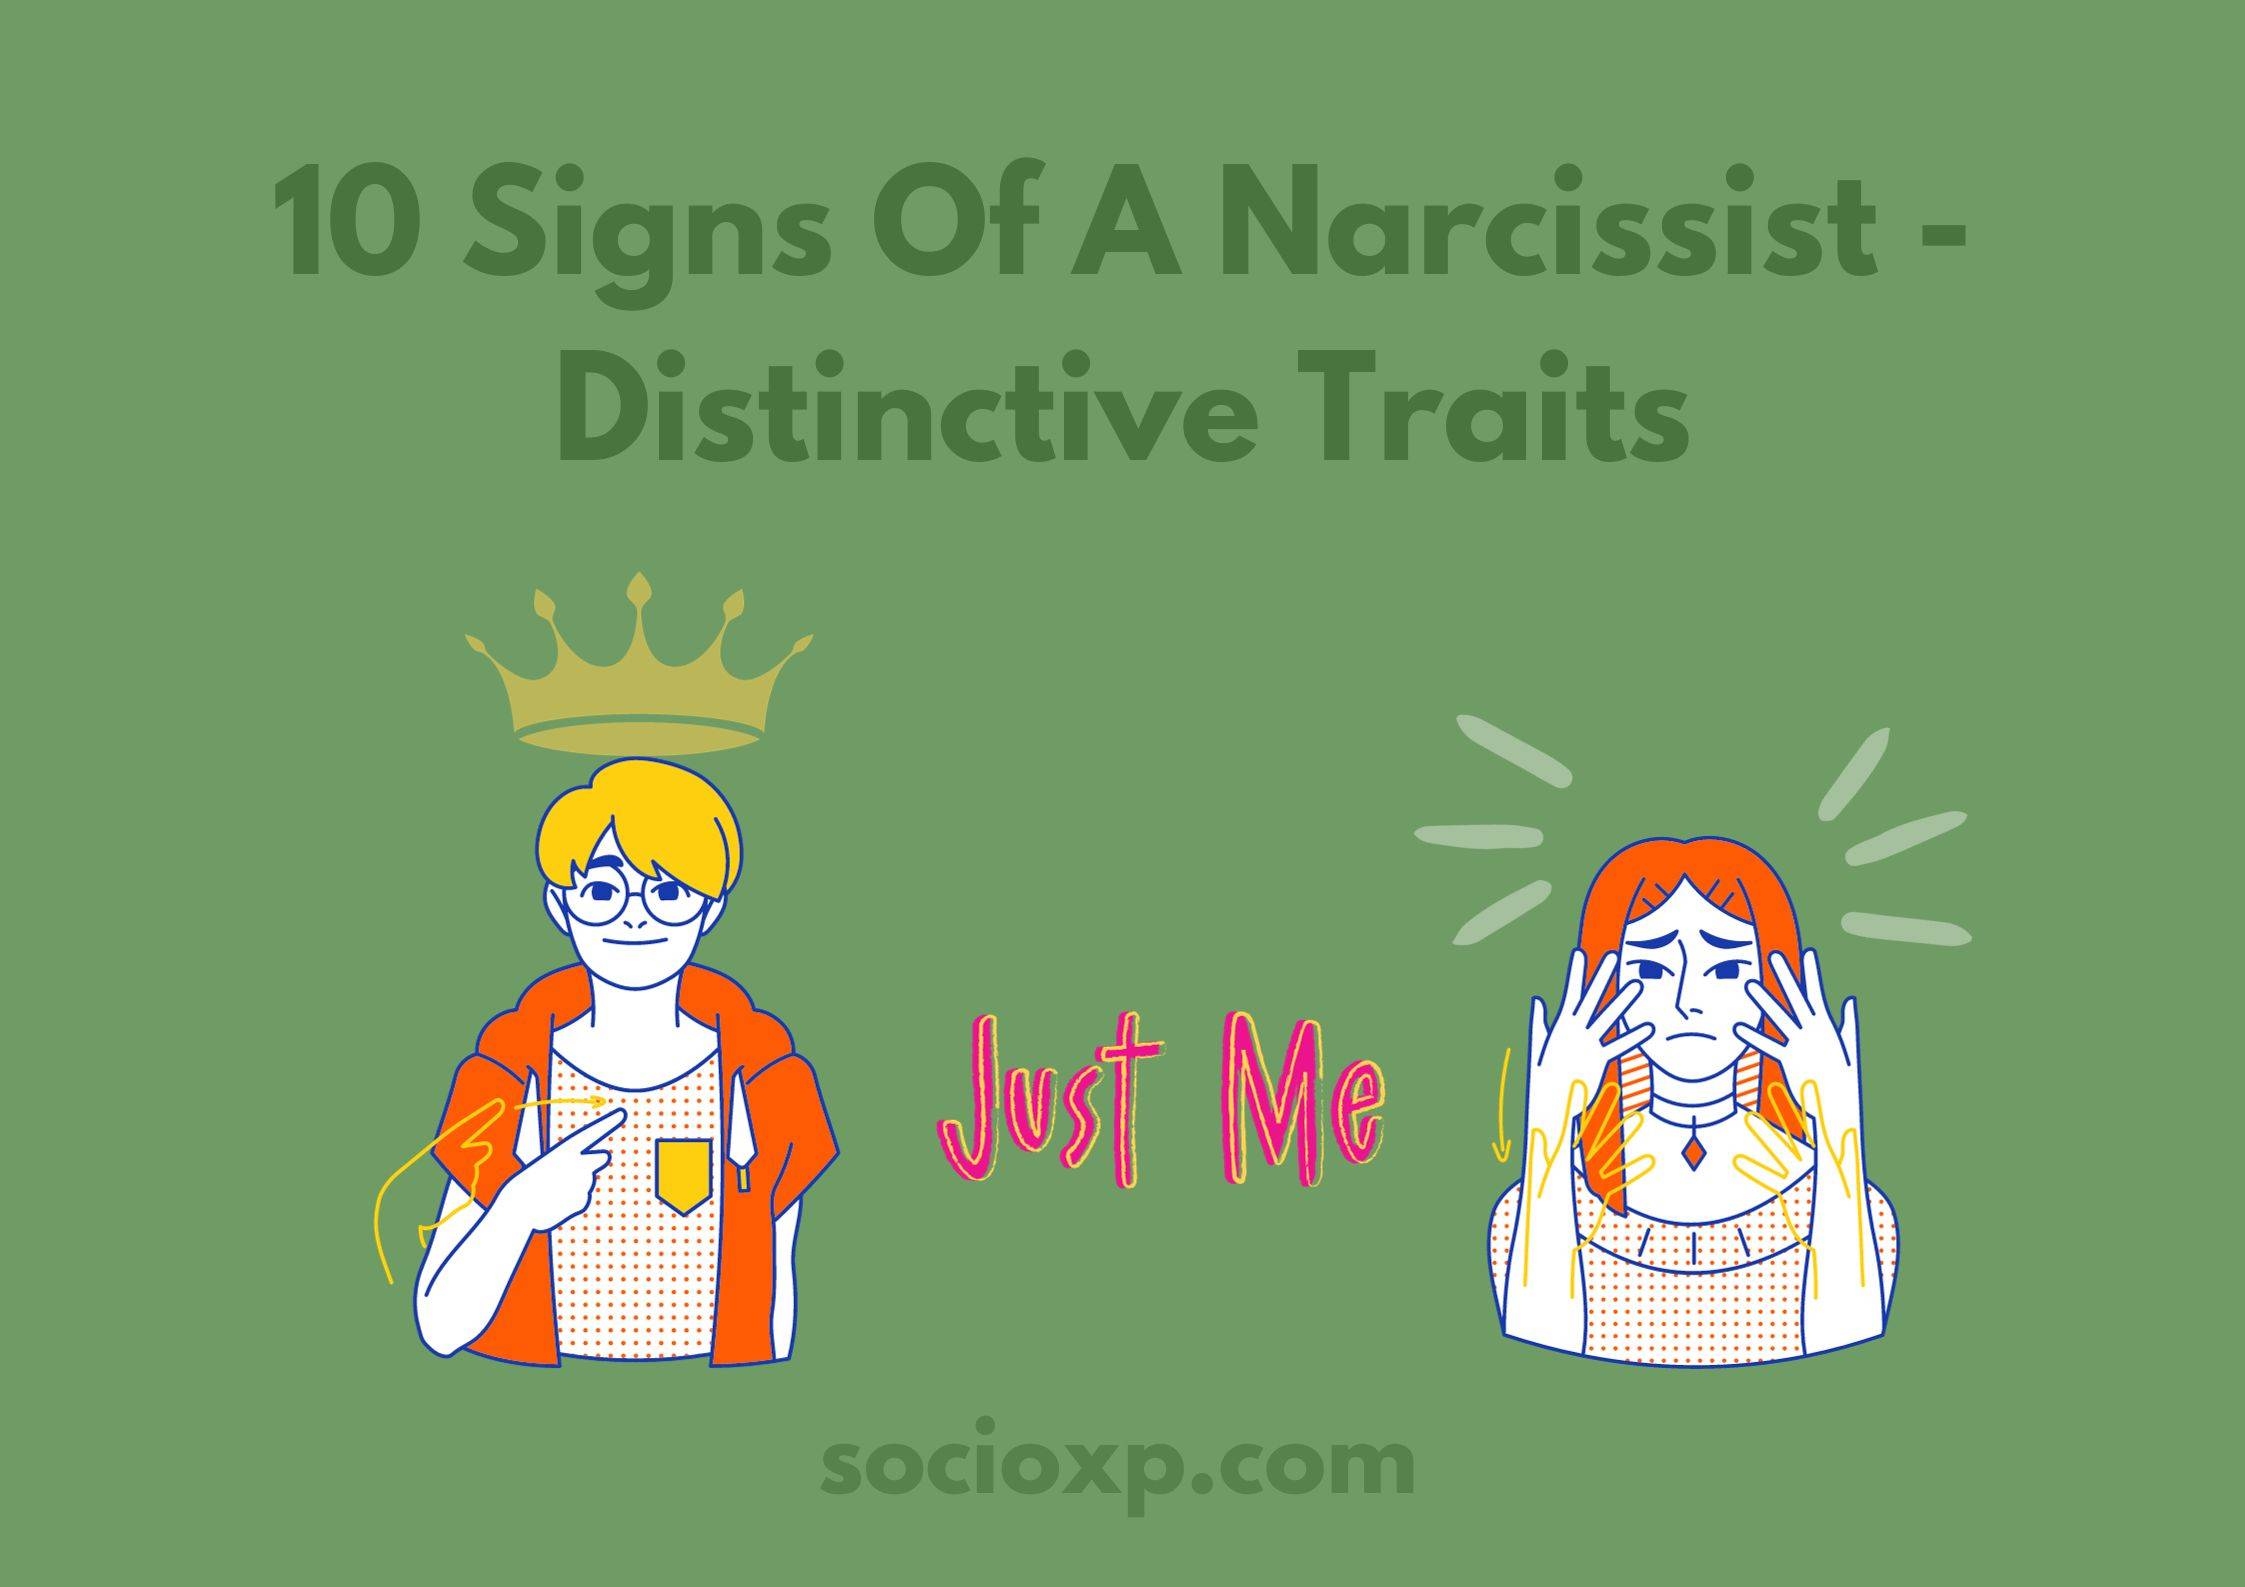 10 Signs Of A Narcissist - Distinctive Traits